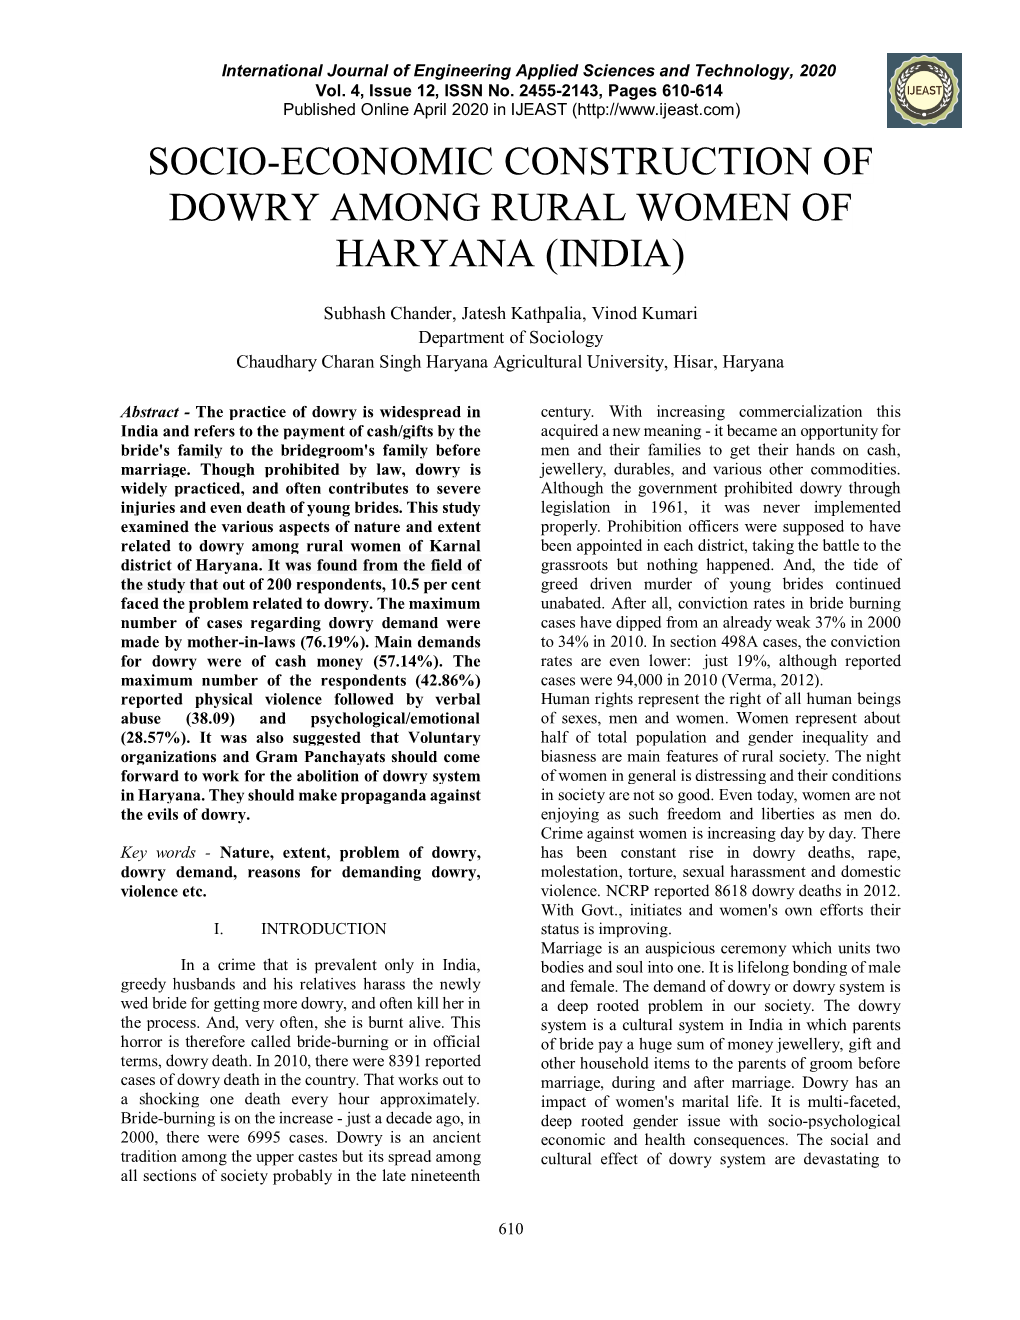 Socio-Economic Construction of Dowry Among Rural Women of Haryana (India)